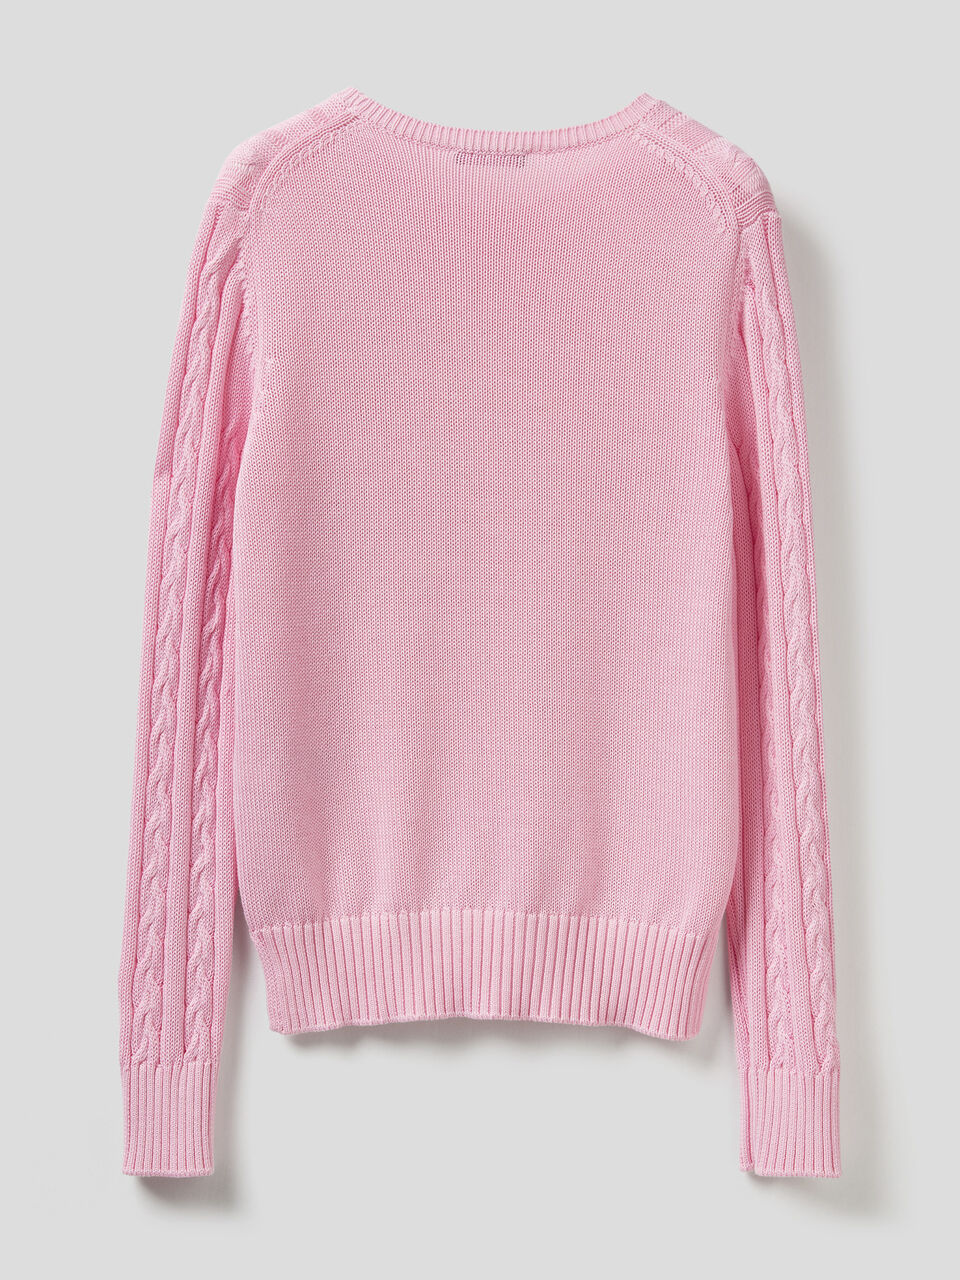 190712] vandythepink IG update with Lisa 🌻 ⠀⠀⠀⠀⠀⠀⠀⠀⠀ ⠀⠀⠀⠀⠀ ⠀⠀ Lisa wears  #vandythepink sweater, hold their plu…